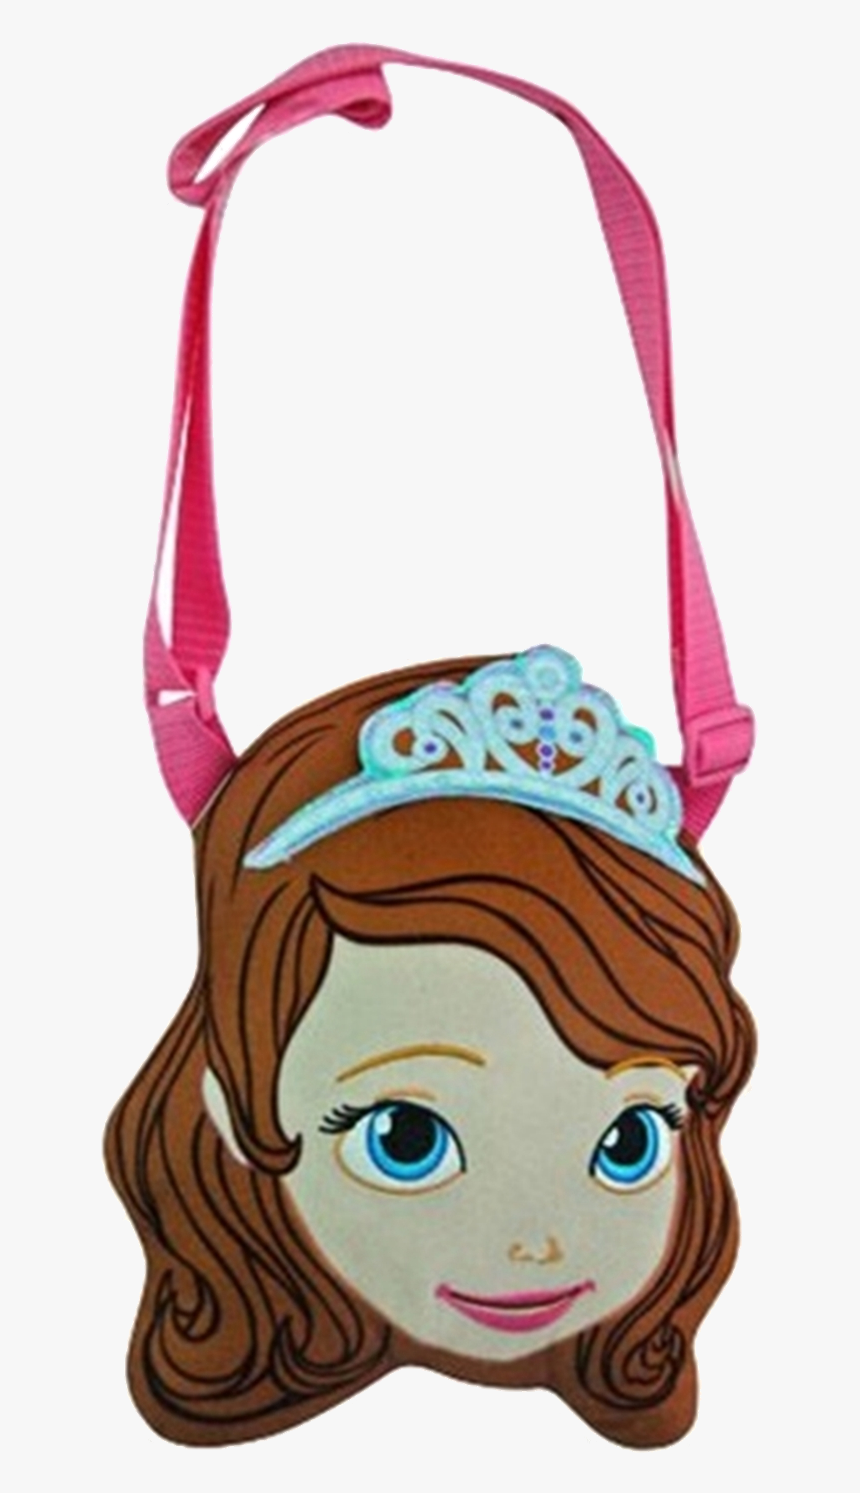 Princess Sofia Shoulder Bag Plush 9pt5 72dpi 122114 - Sofia The First, HD Png Download, Free Download